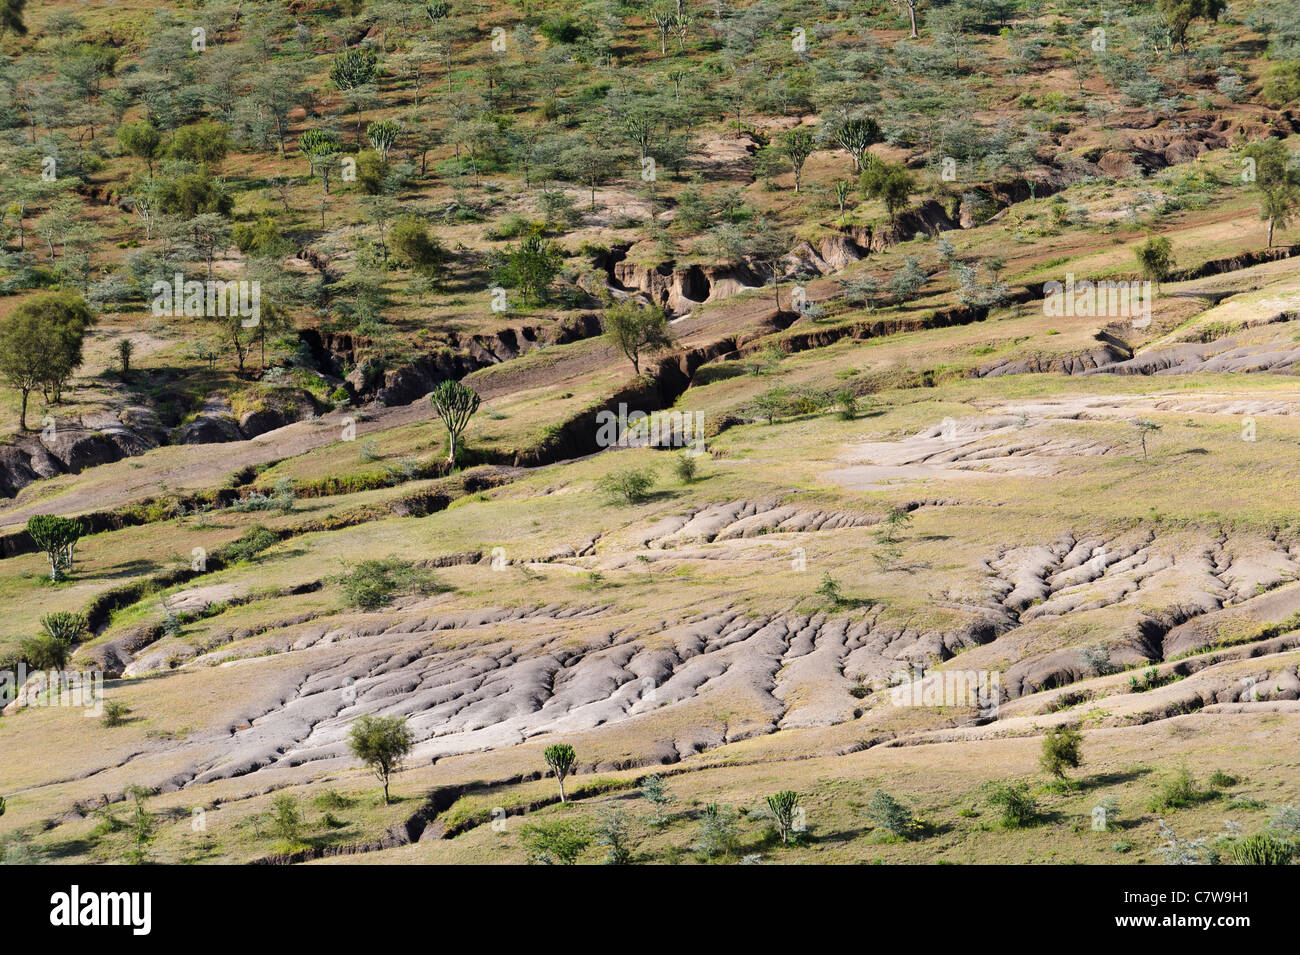 Soil erosion as a result of over grazing, Meserani, Tanzania. Stock Photo